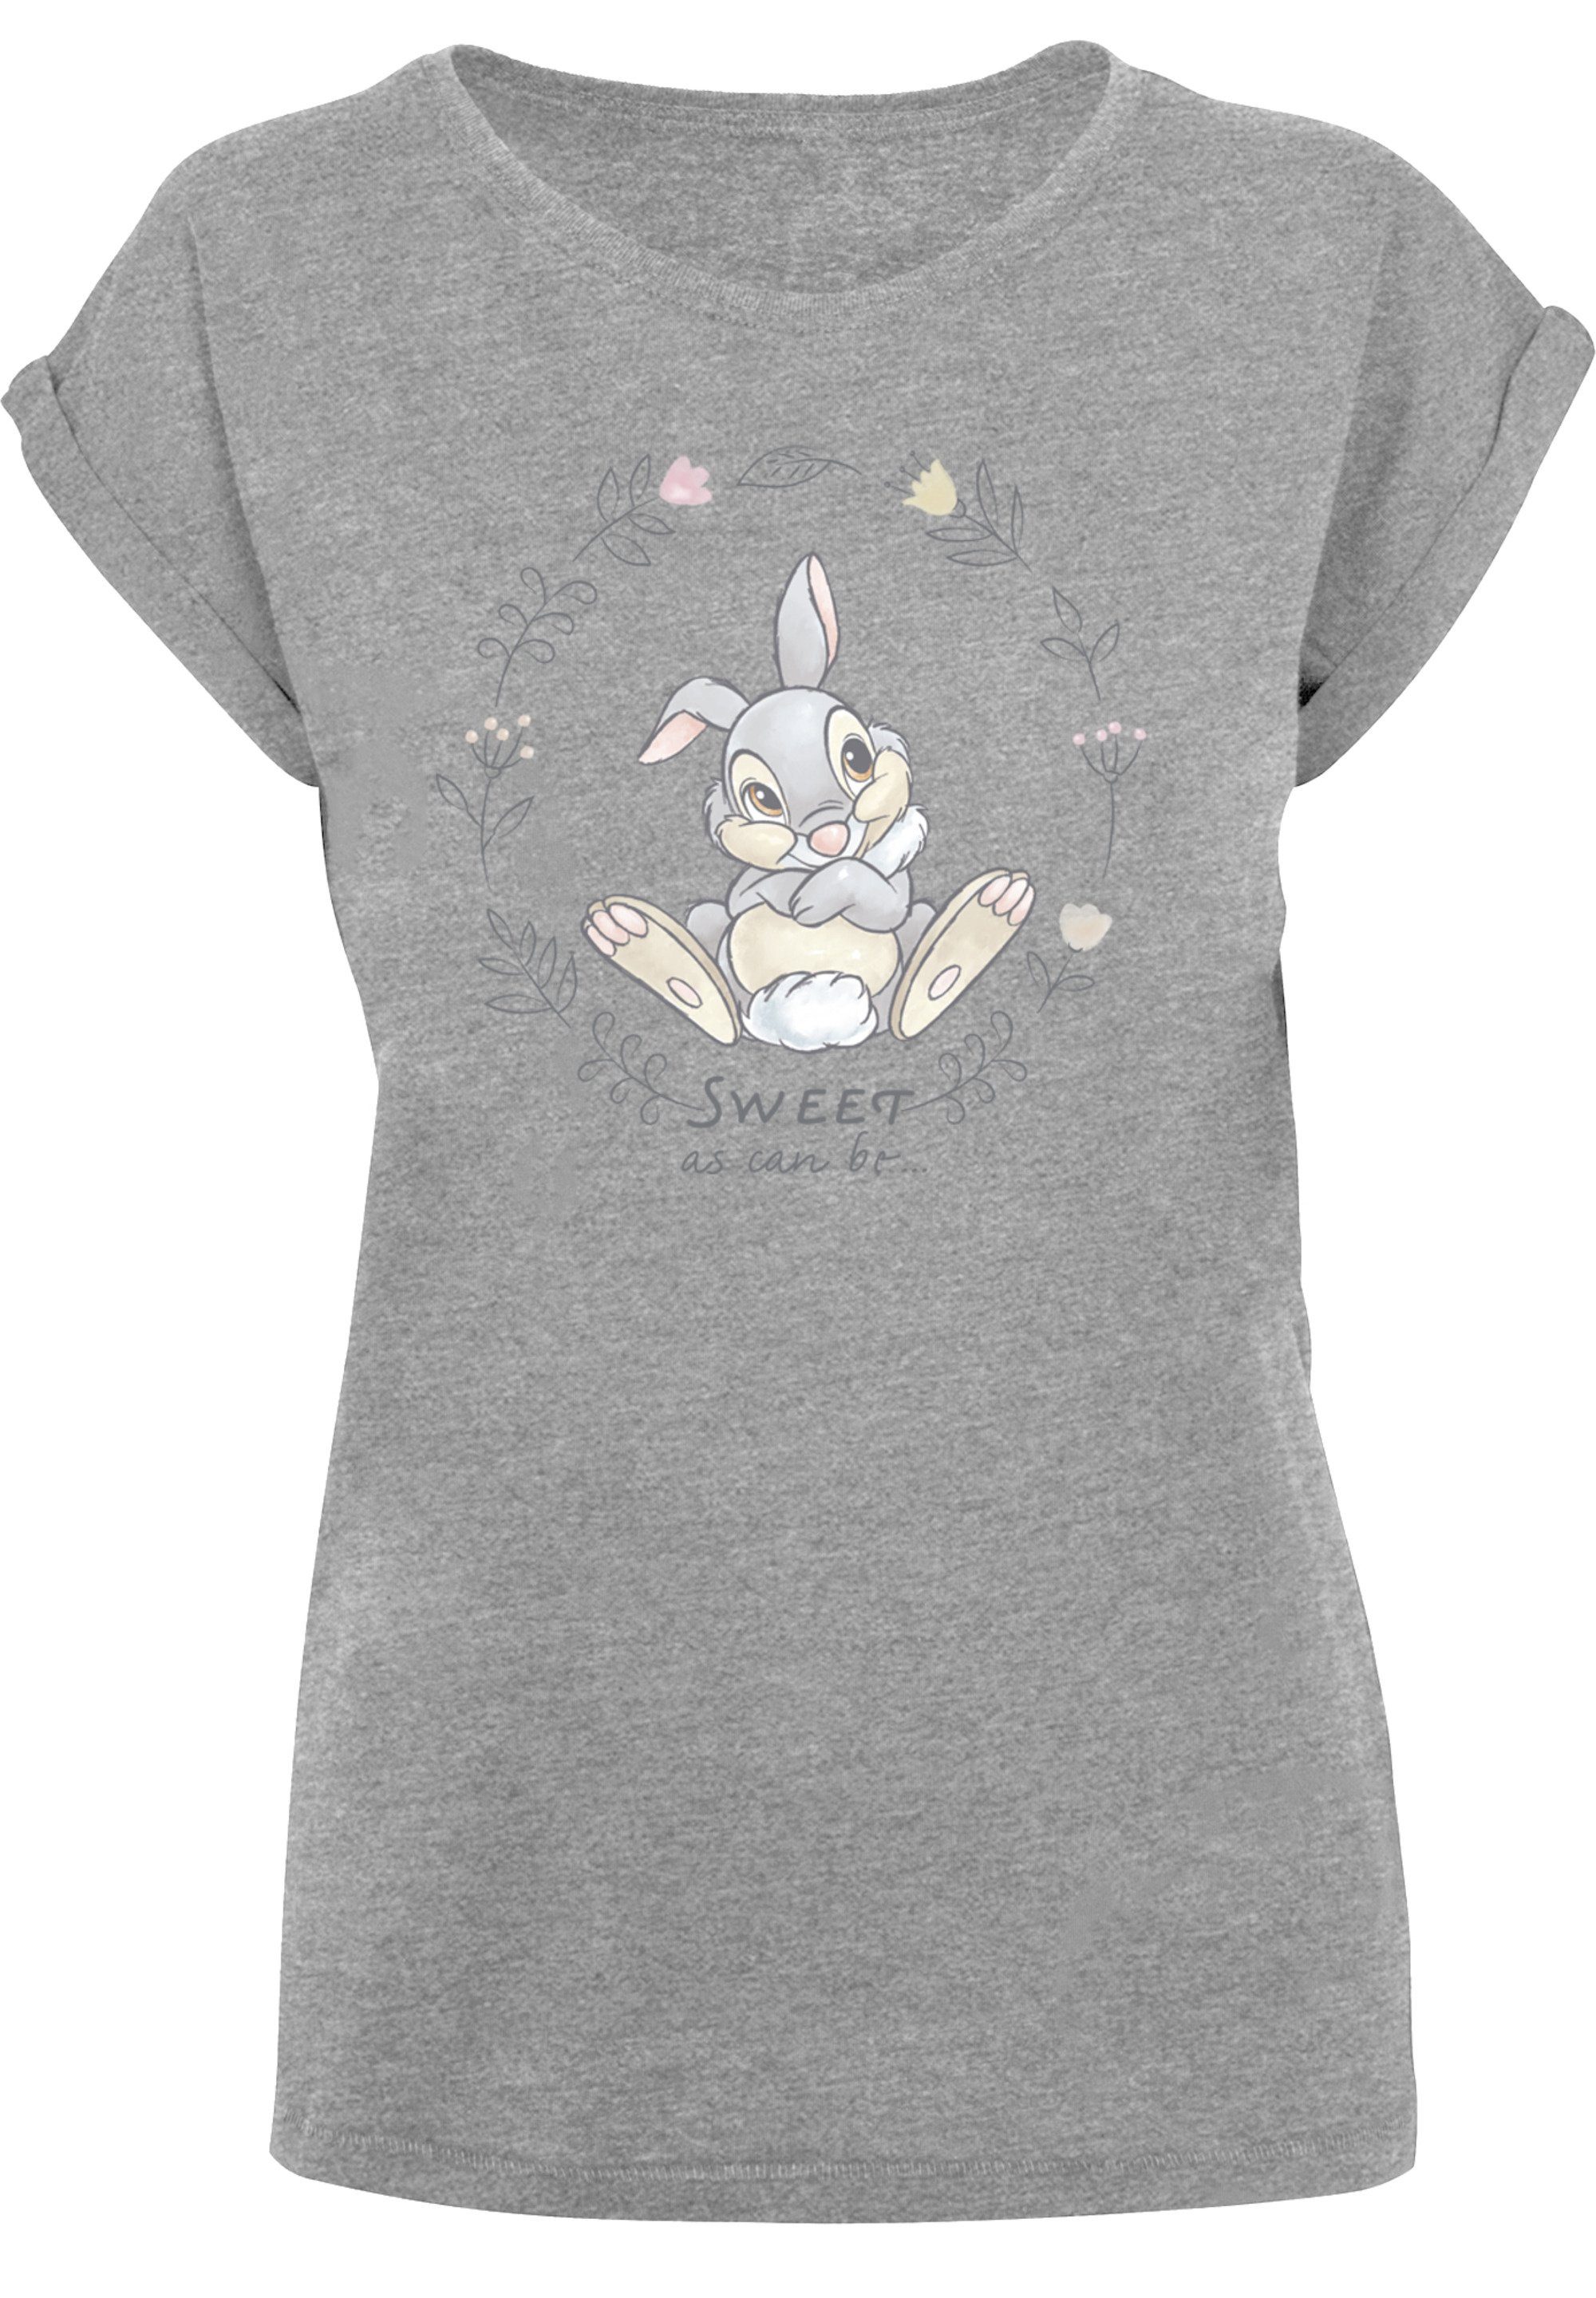 F4NT4STIC T-Shirt Disney Bambi Klopfer Be Can Print, Baumwollstoff mit hohem Tragekomfort Thumper As Sweet weicher Sehr